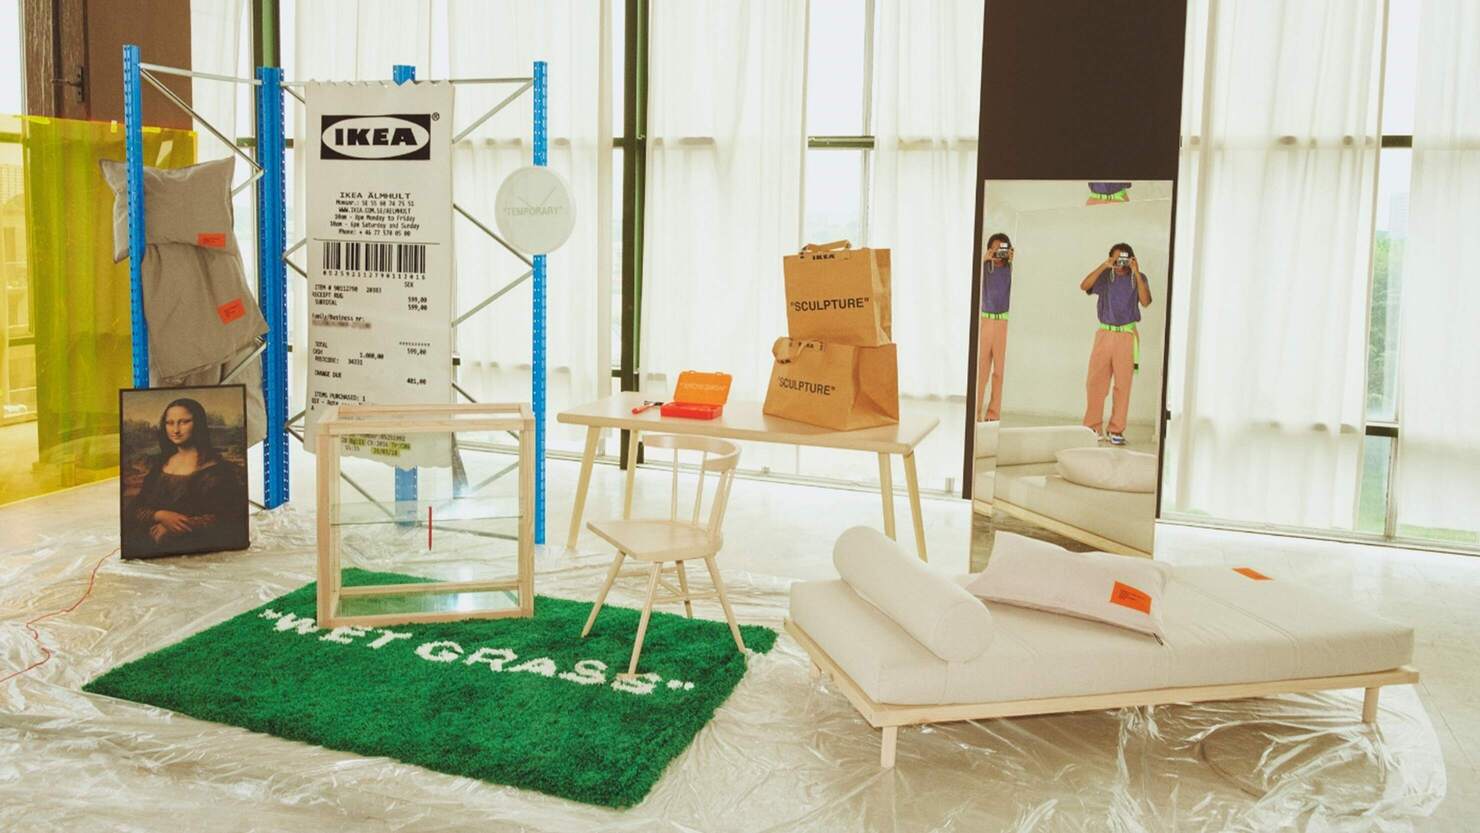 IKEA Virgil Abloh collection